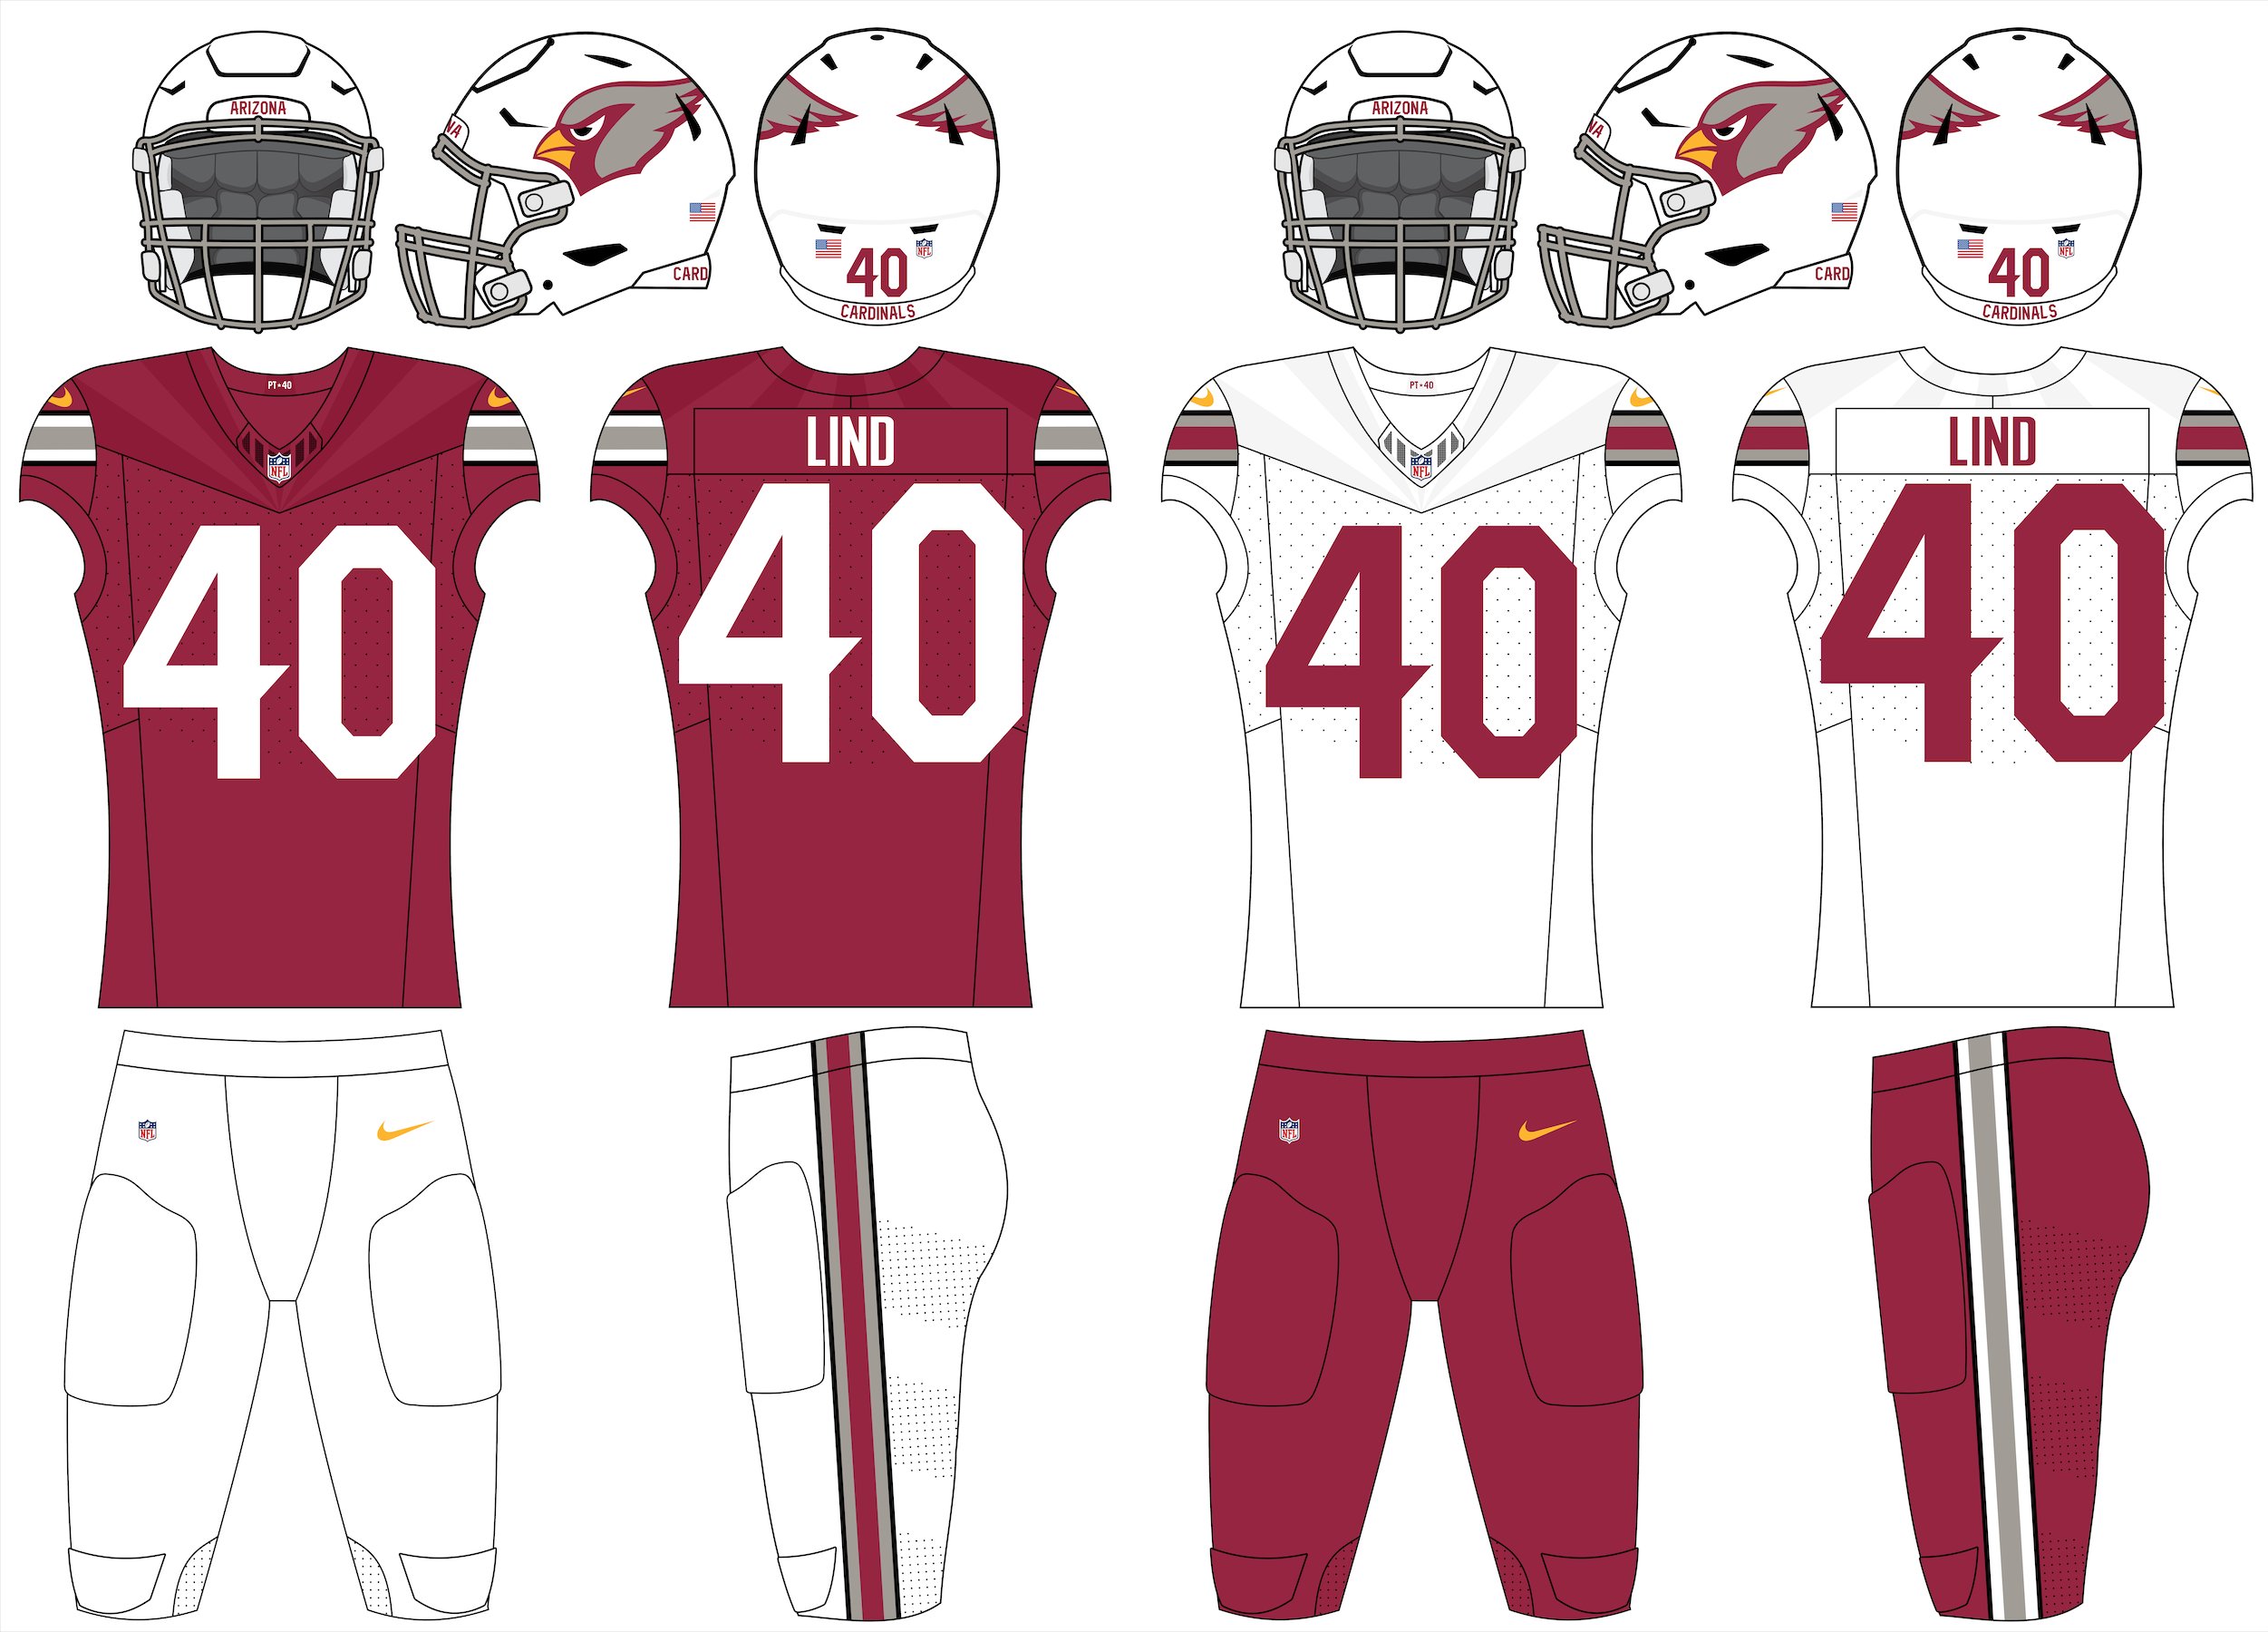 redesign arizona cardinals uniform concept